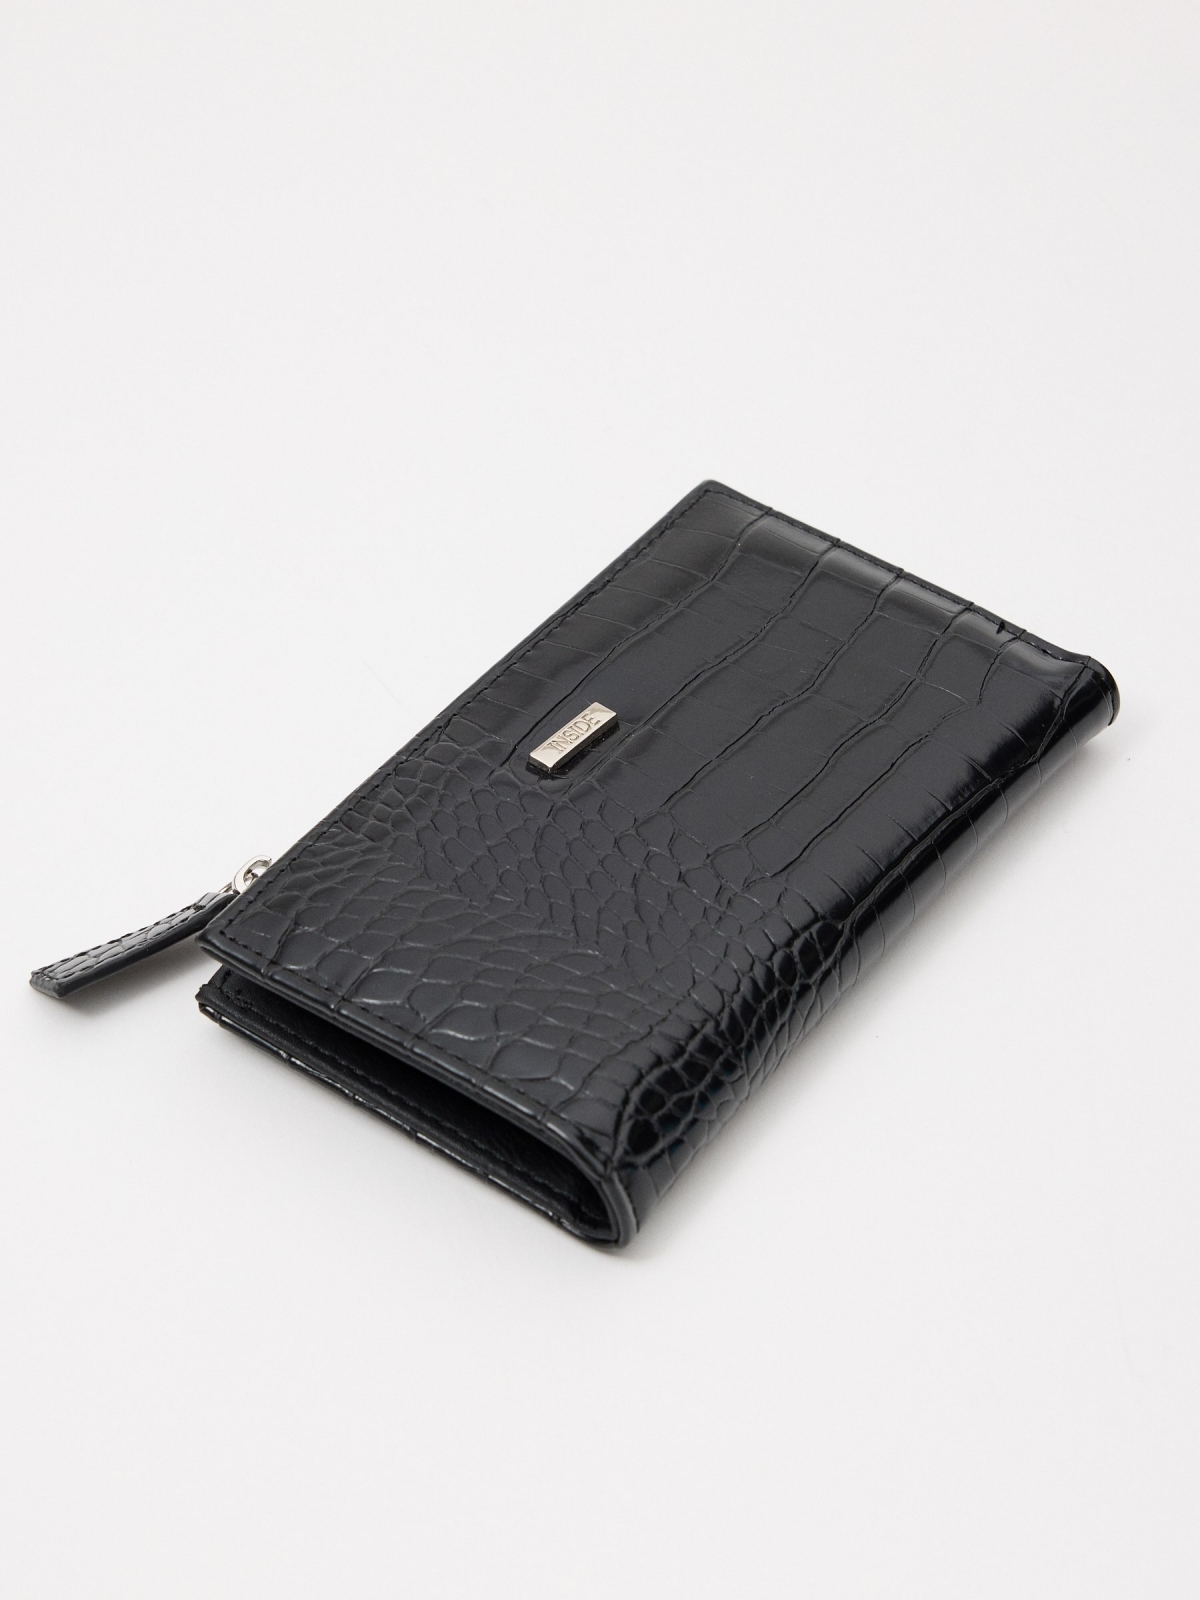 Textured leatherette purse black back view